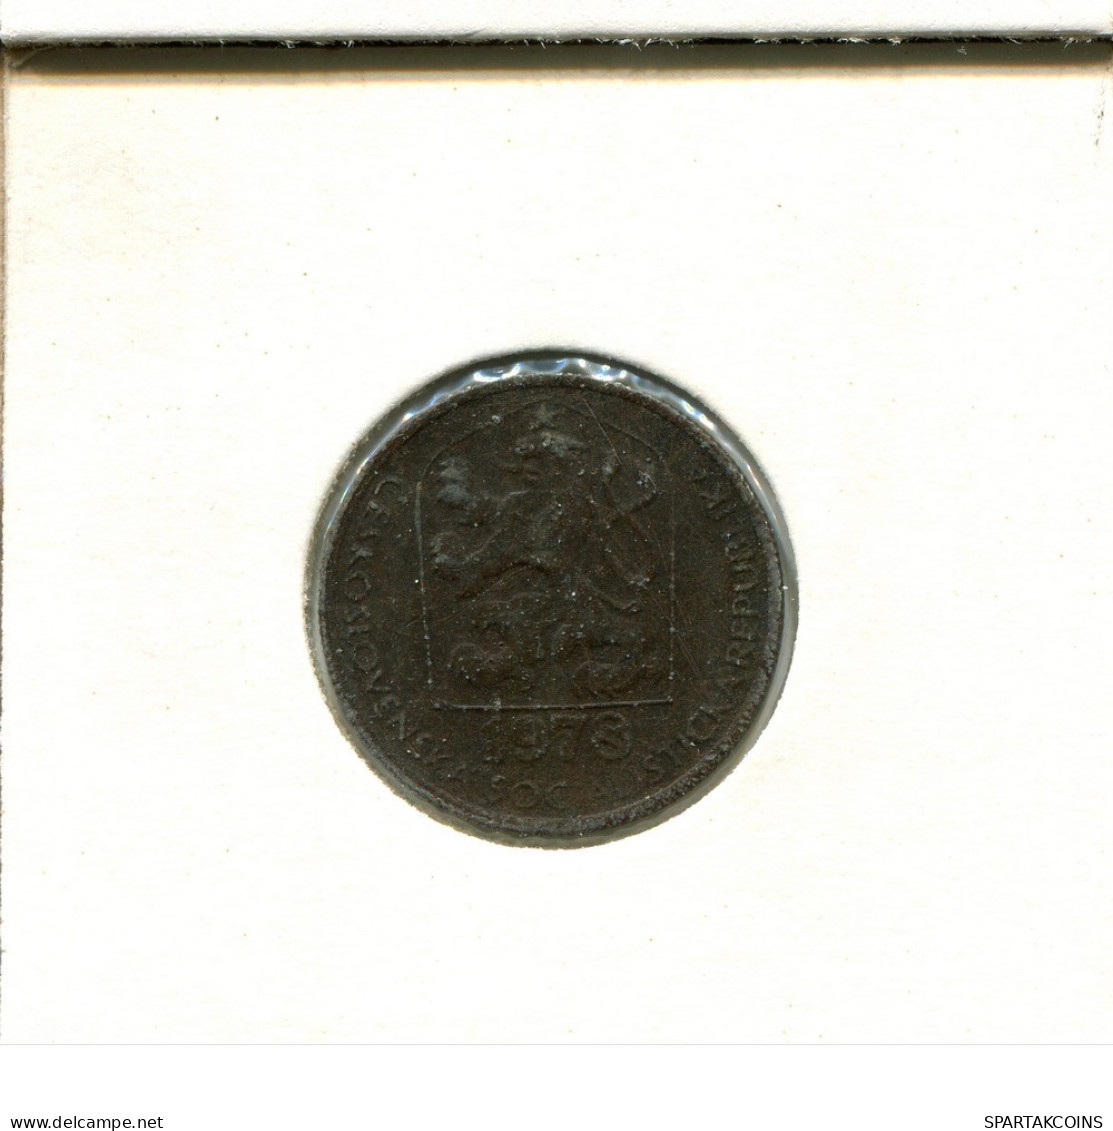 50 HALERU 1978 CZECHOSLOVAKIA Coin #AS955.U.A - Czechoslovakia